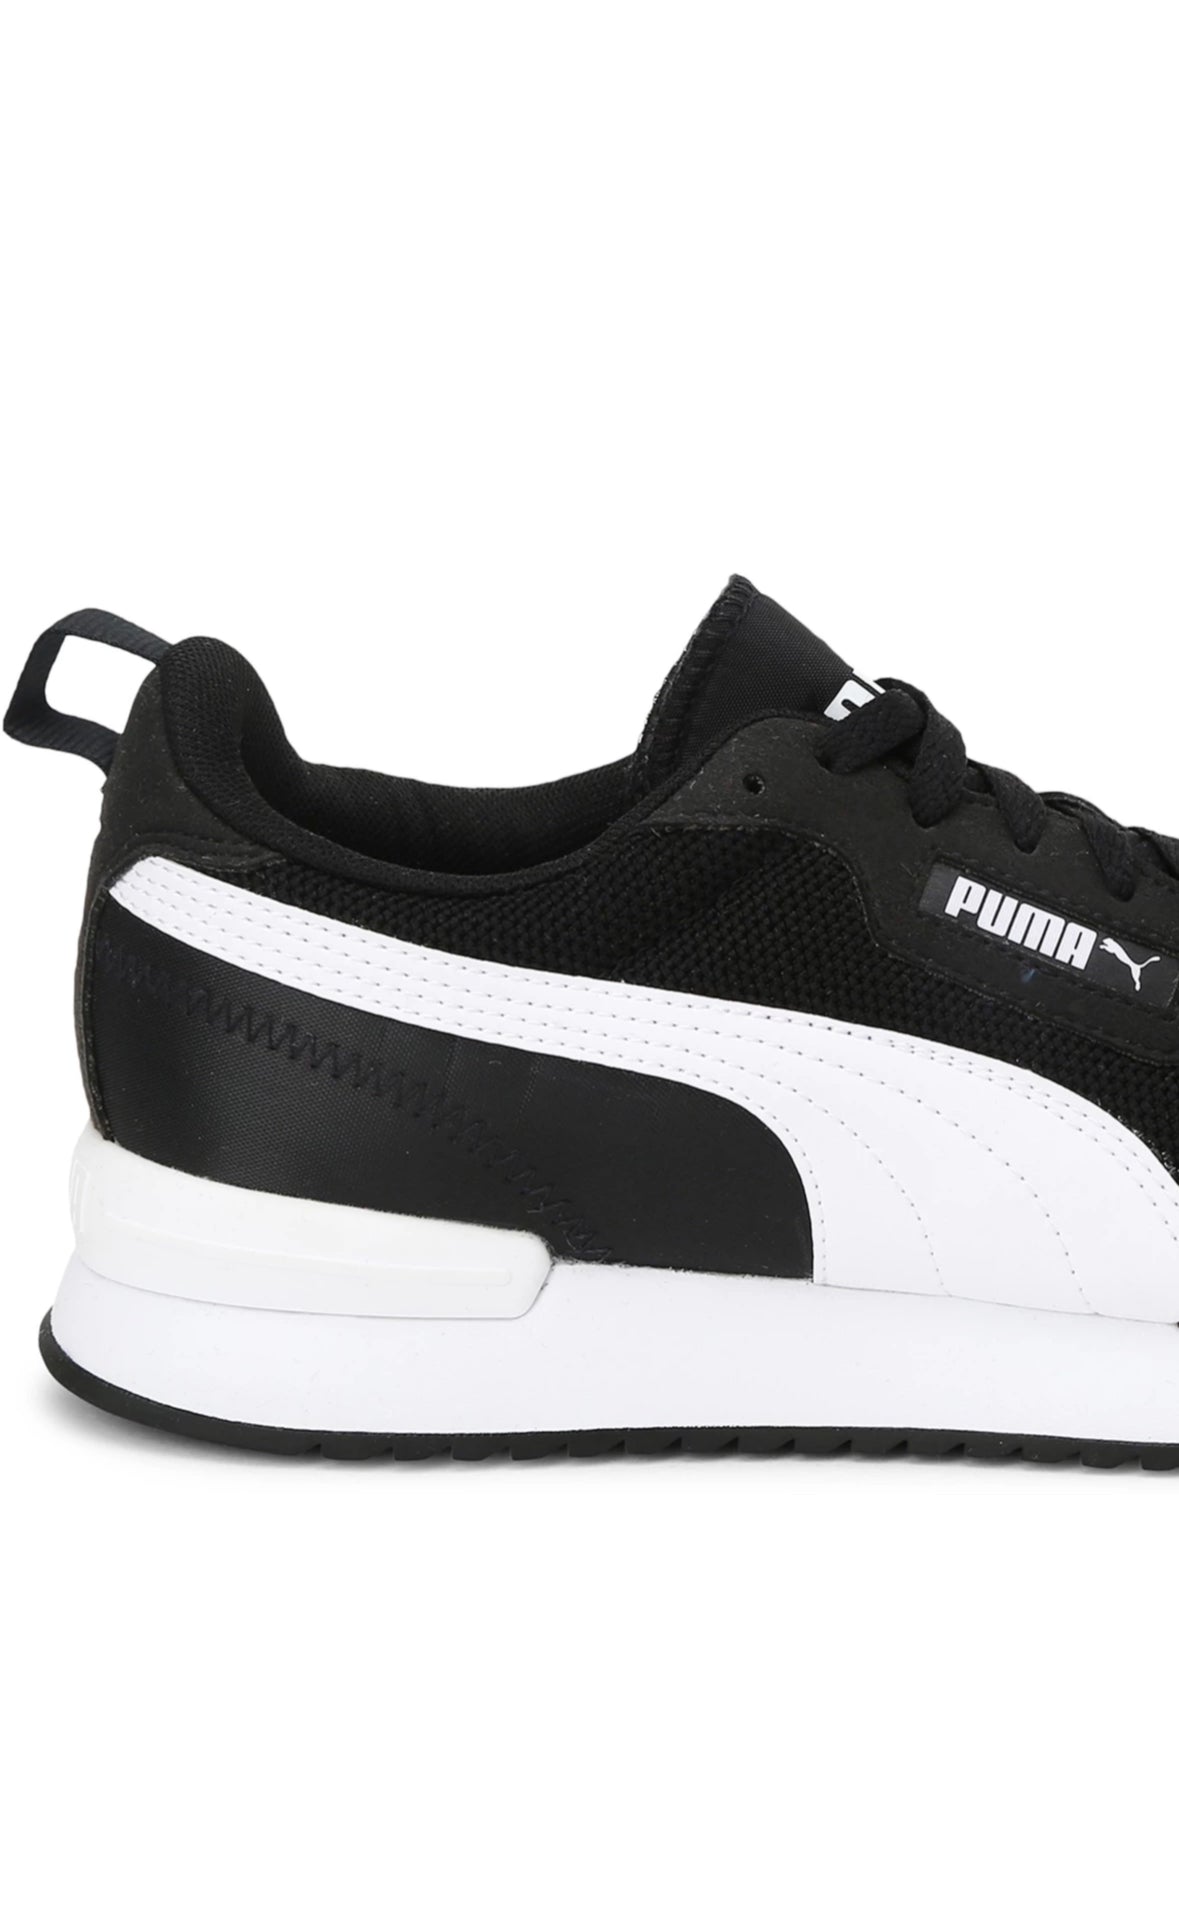 Puma R78 Training & Gym Shoes-373117 01